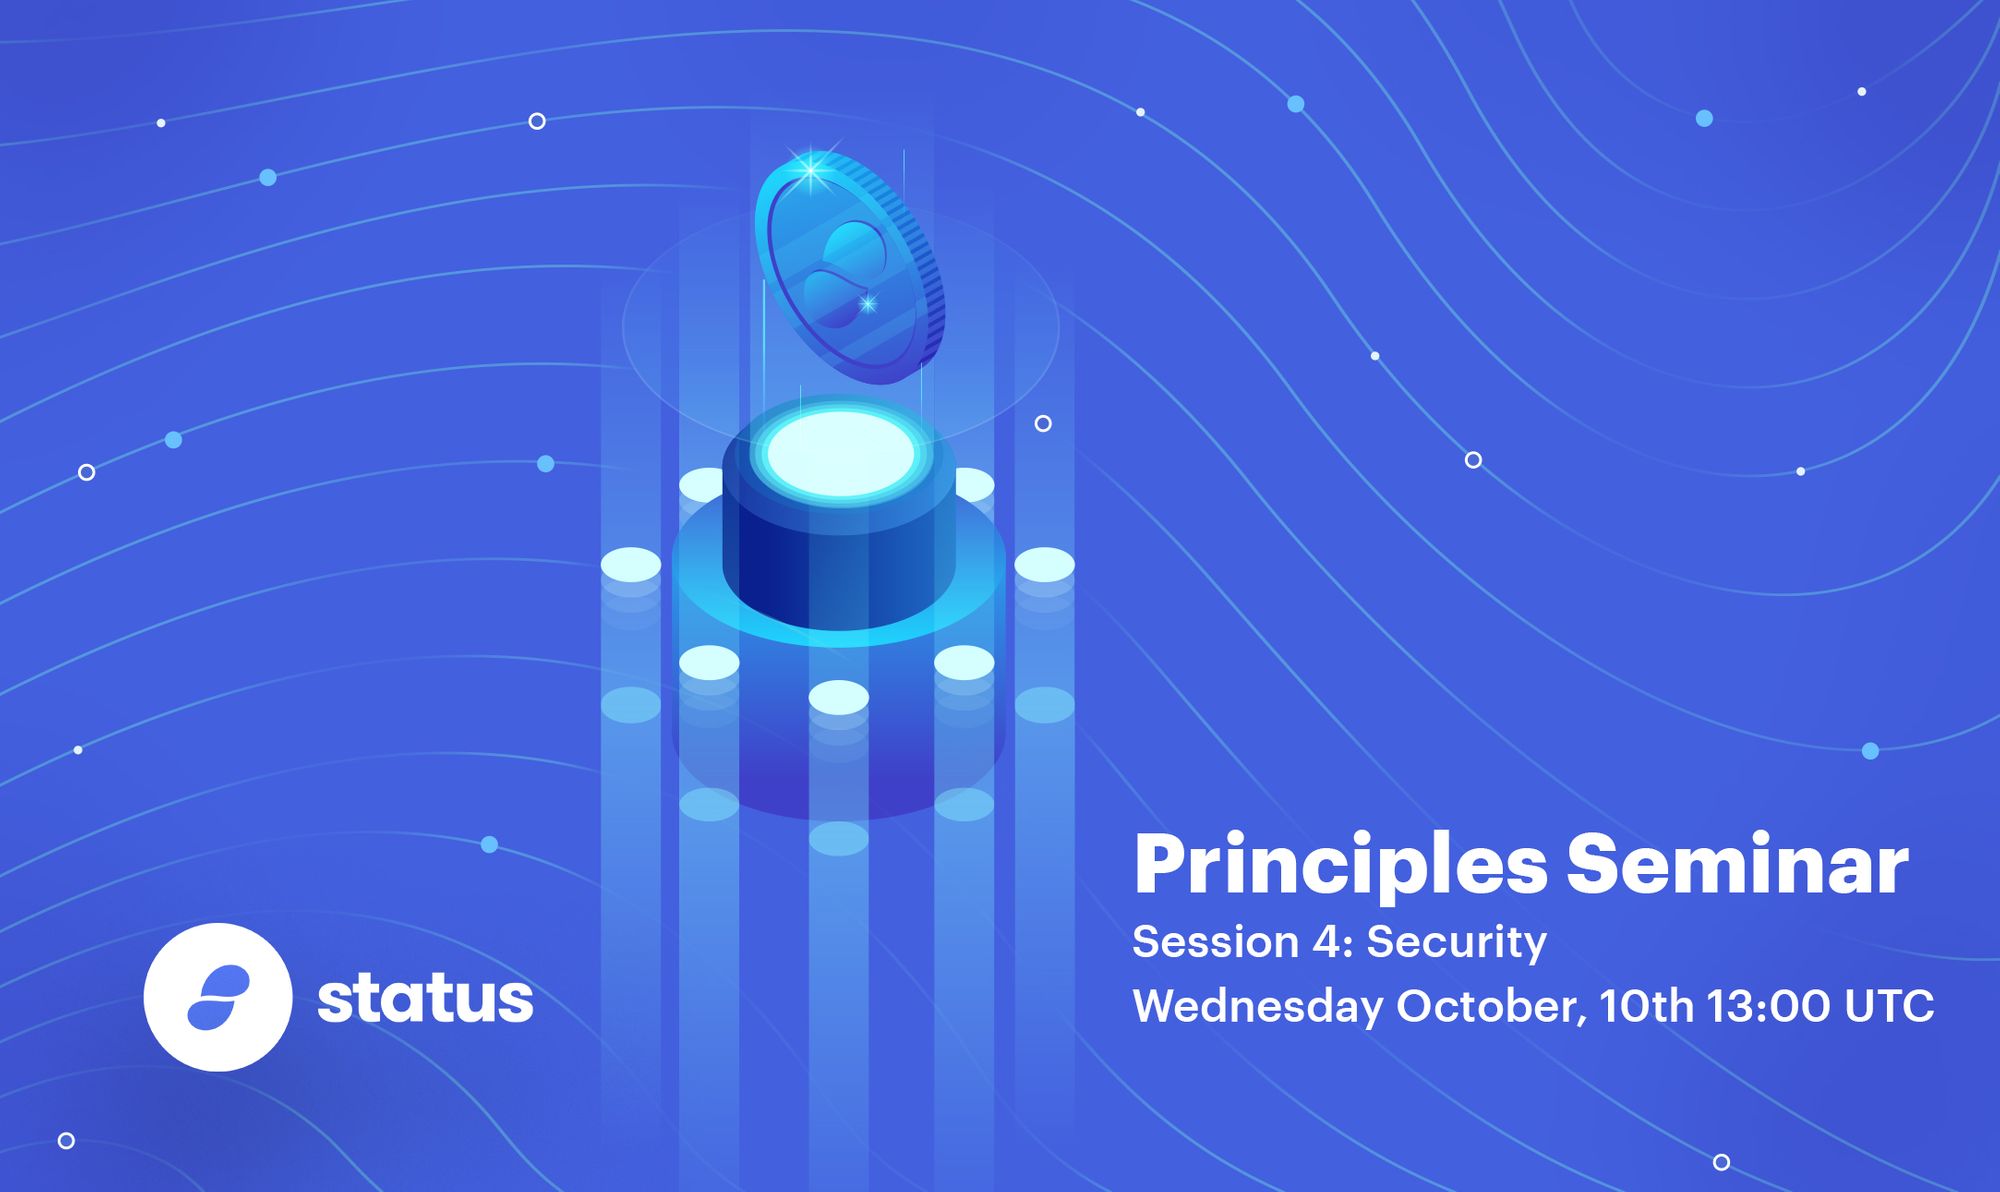 Principles Seminar - Session 4: Security